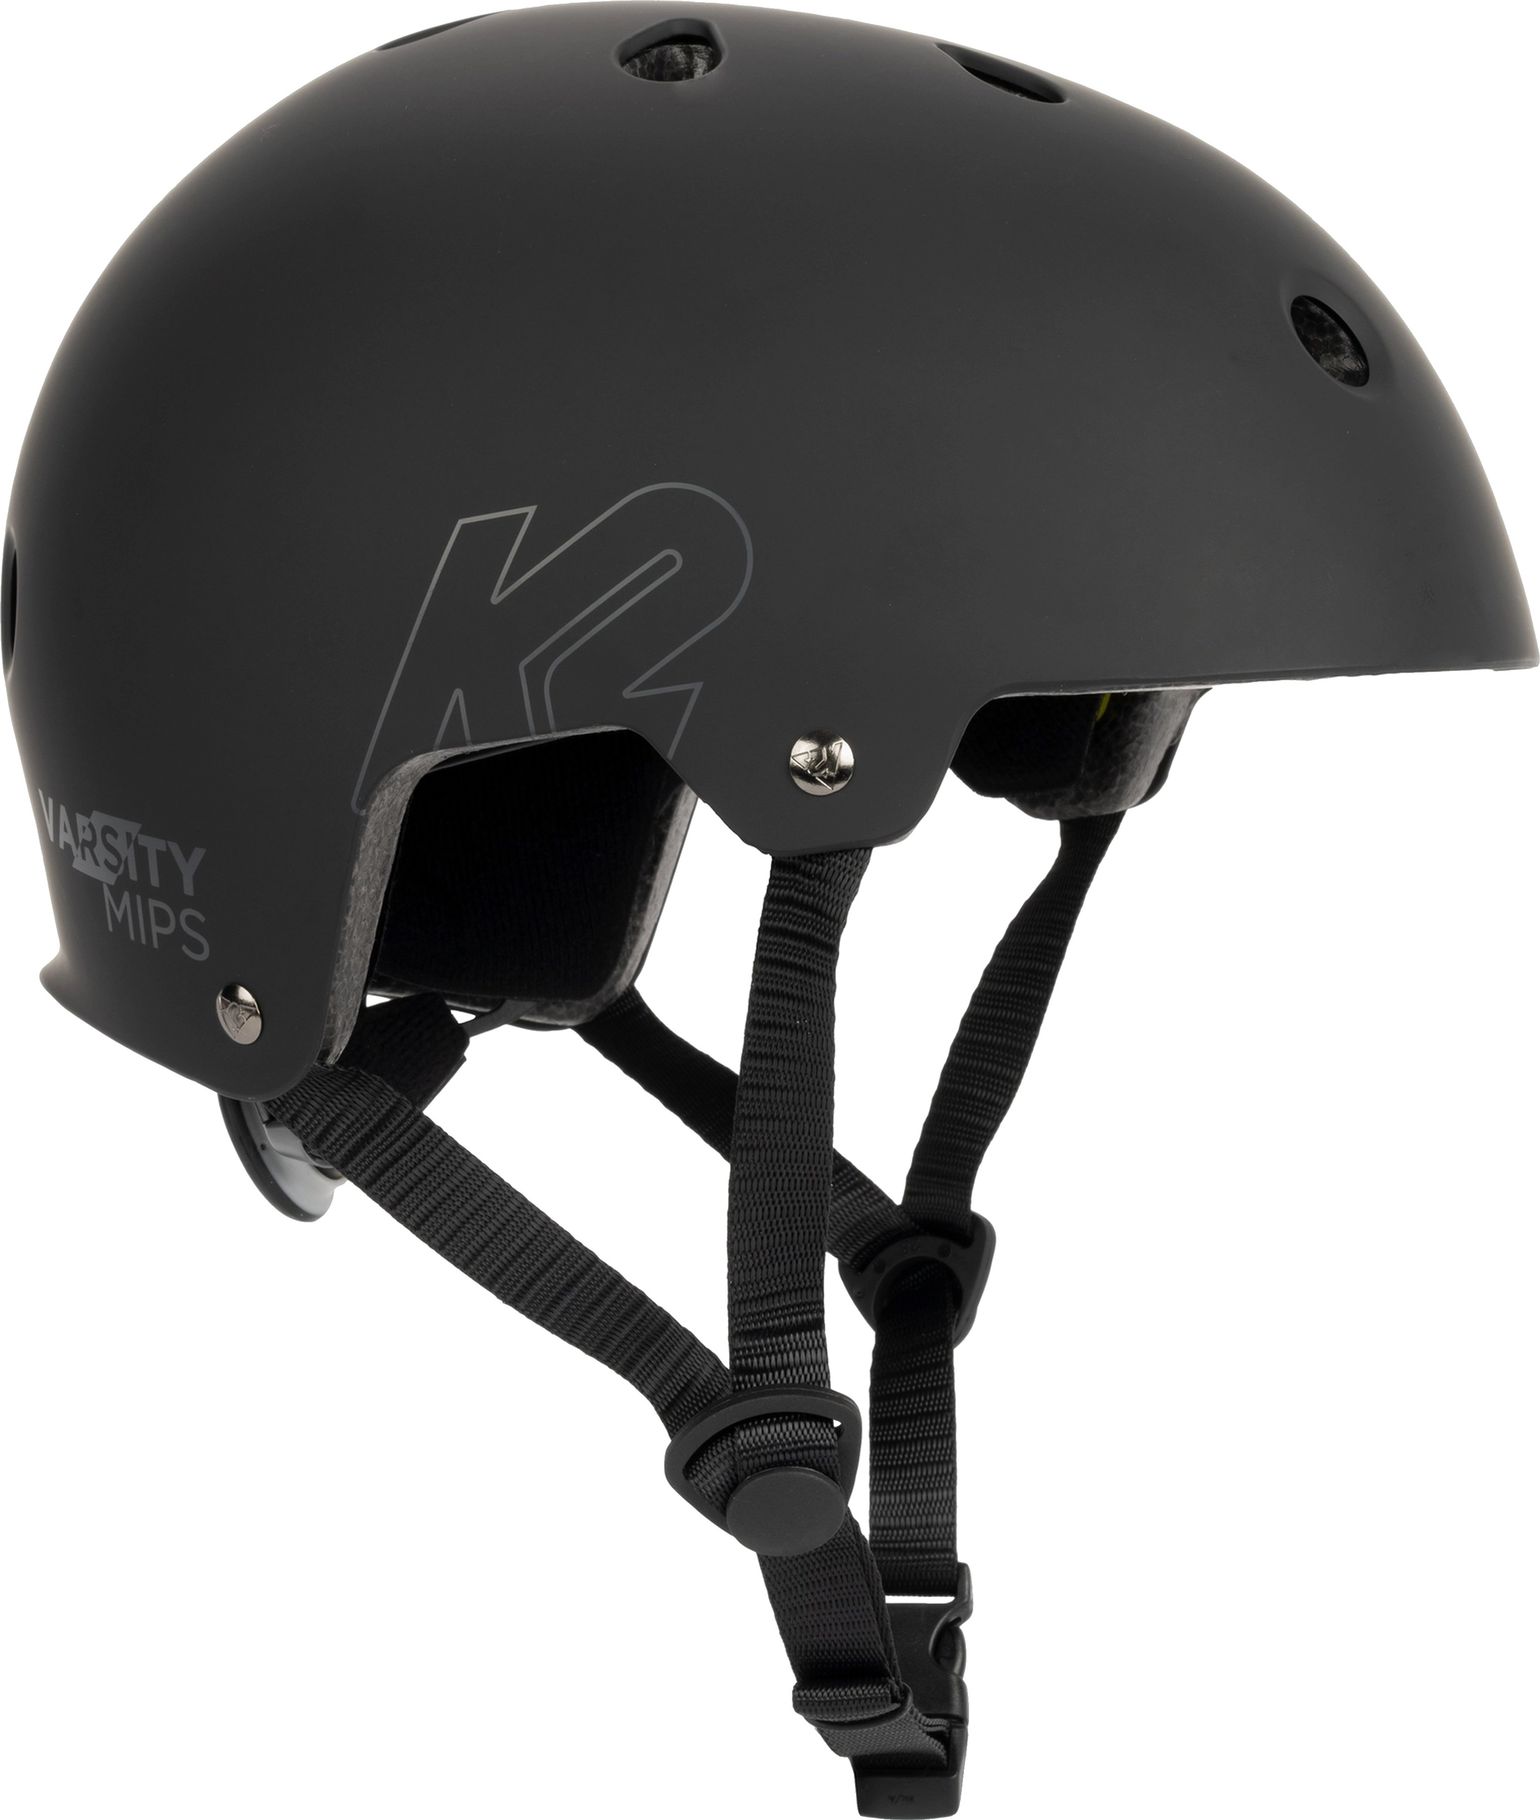 K2 Sports Unisex Varsity Mips Helmet Black